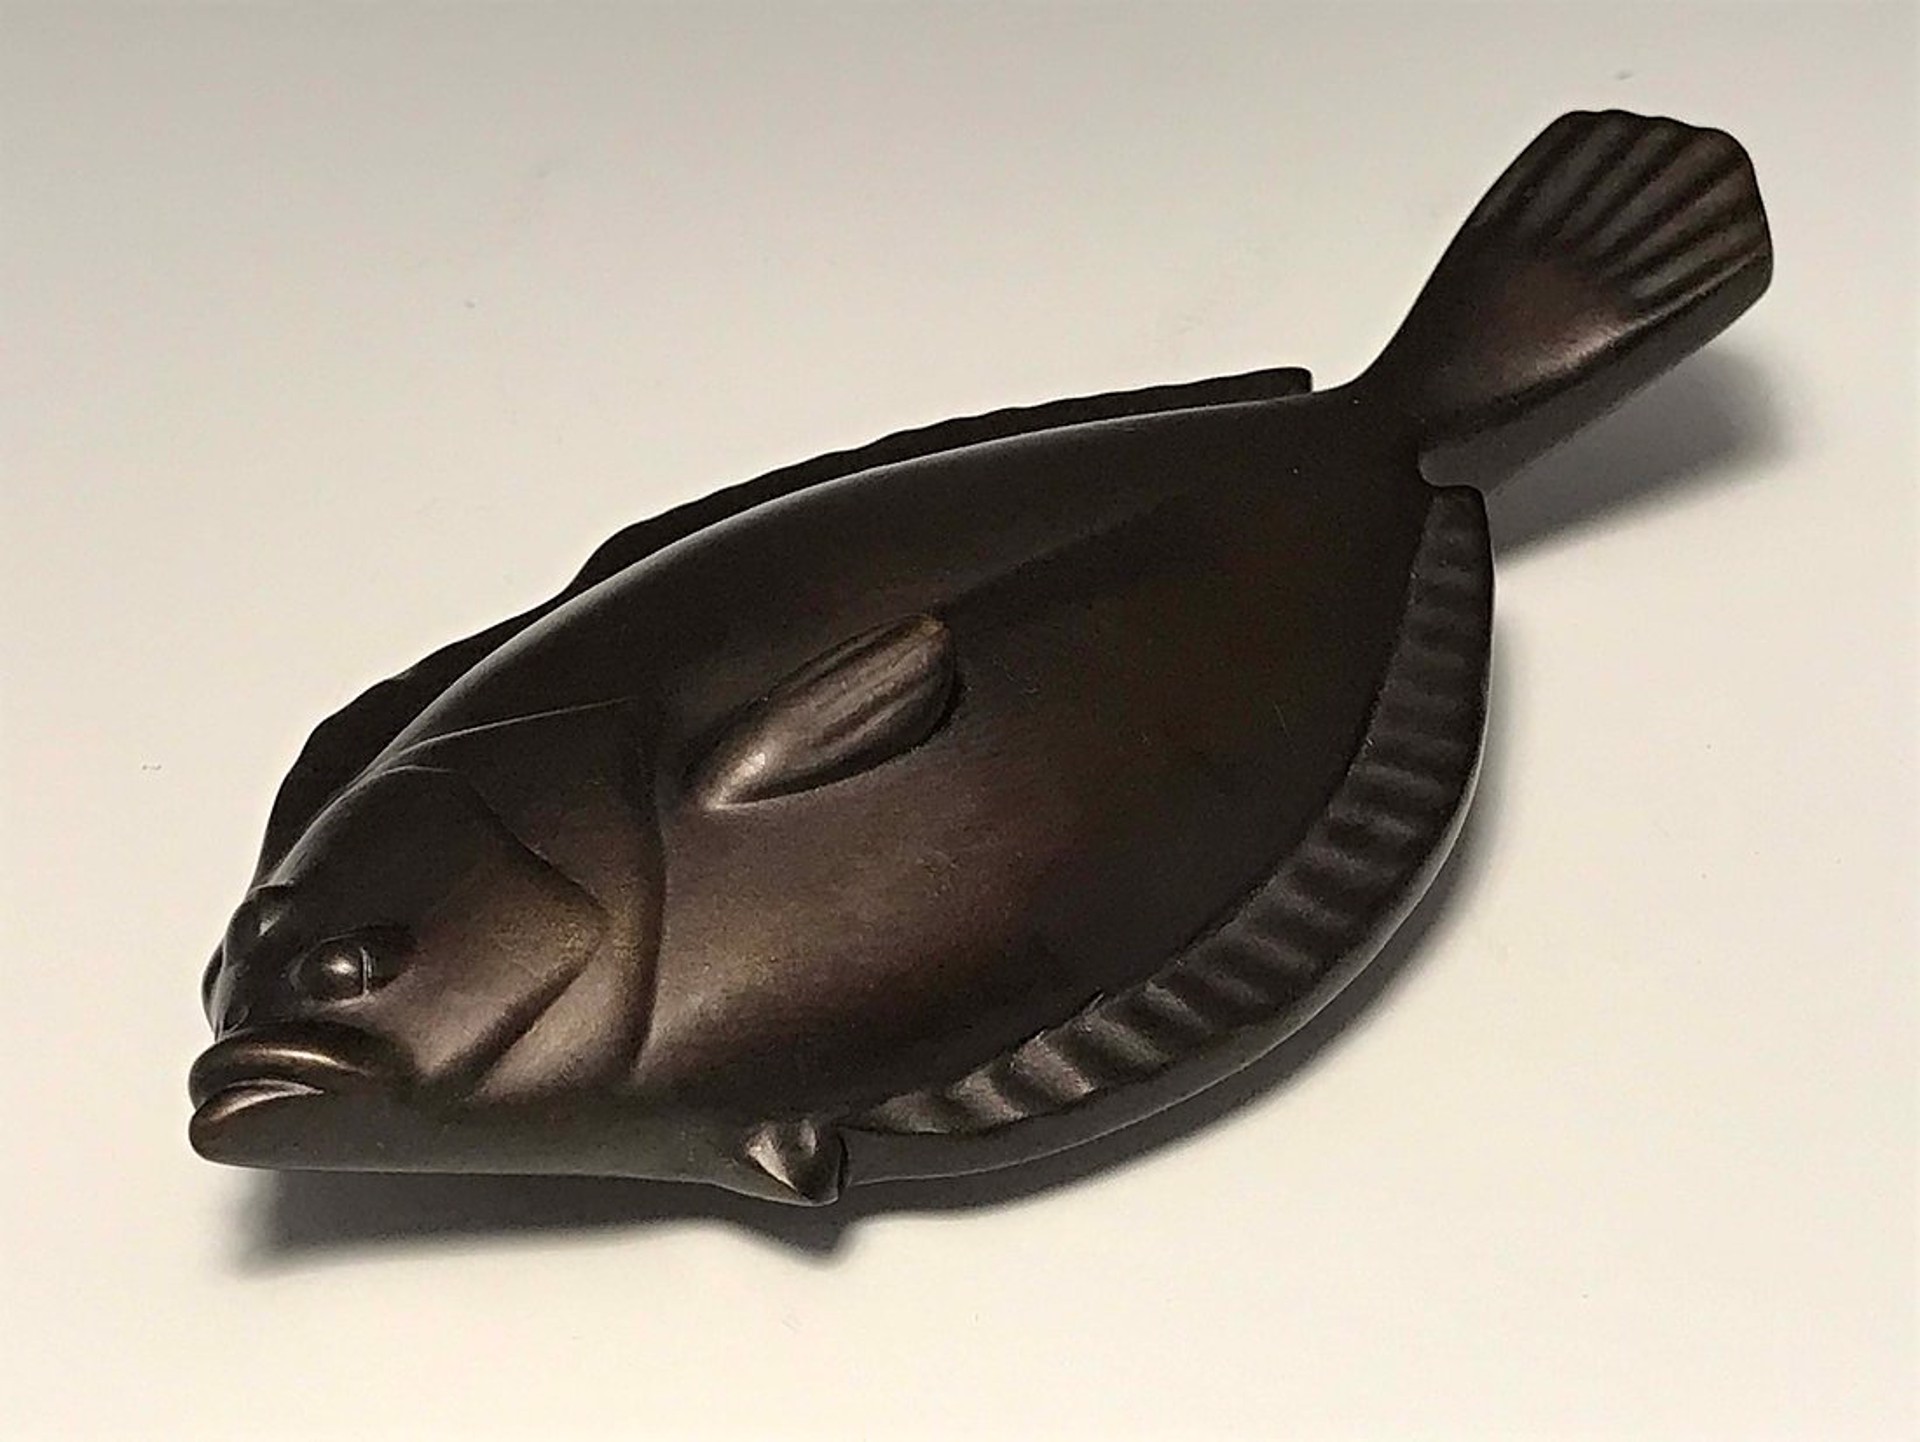 Flounder by David Everett